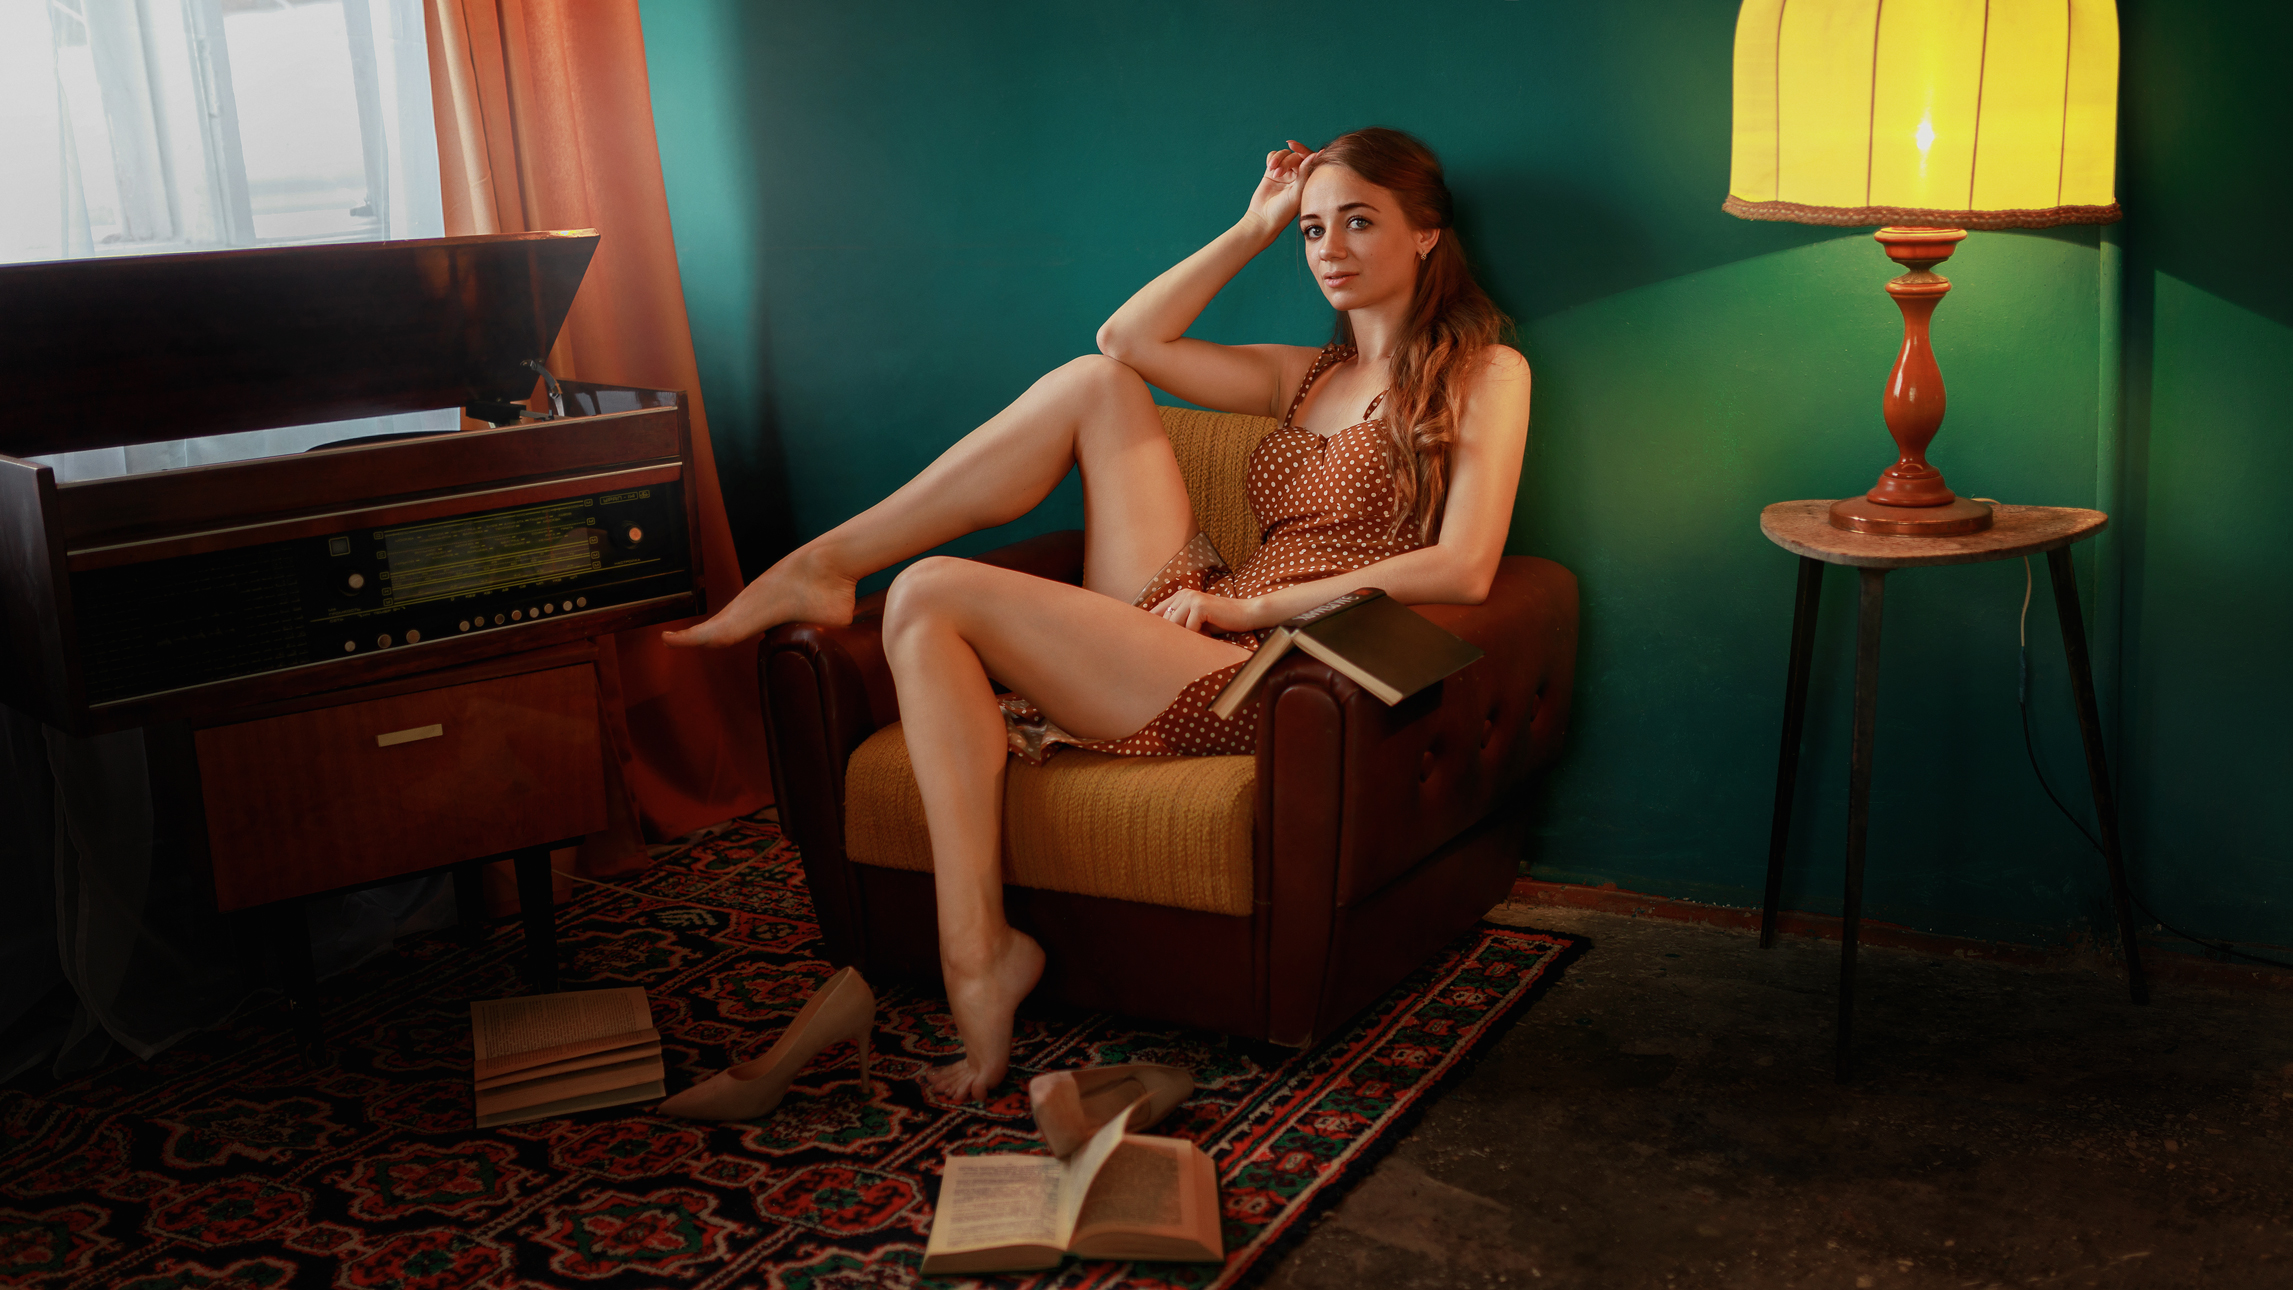 Aleksey Yuriev Women Dress Dots Barefoot Messy Stereos Looking At Viewer Books Model Legs Tiptoe Wom 2293x1290